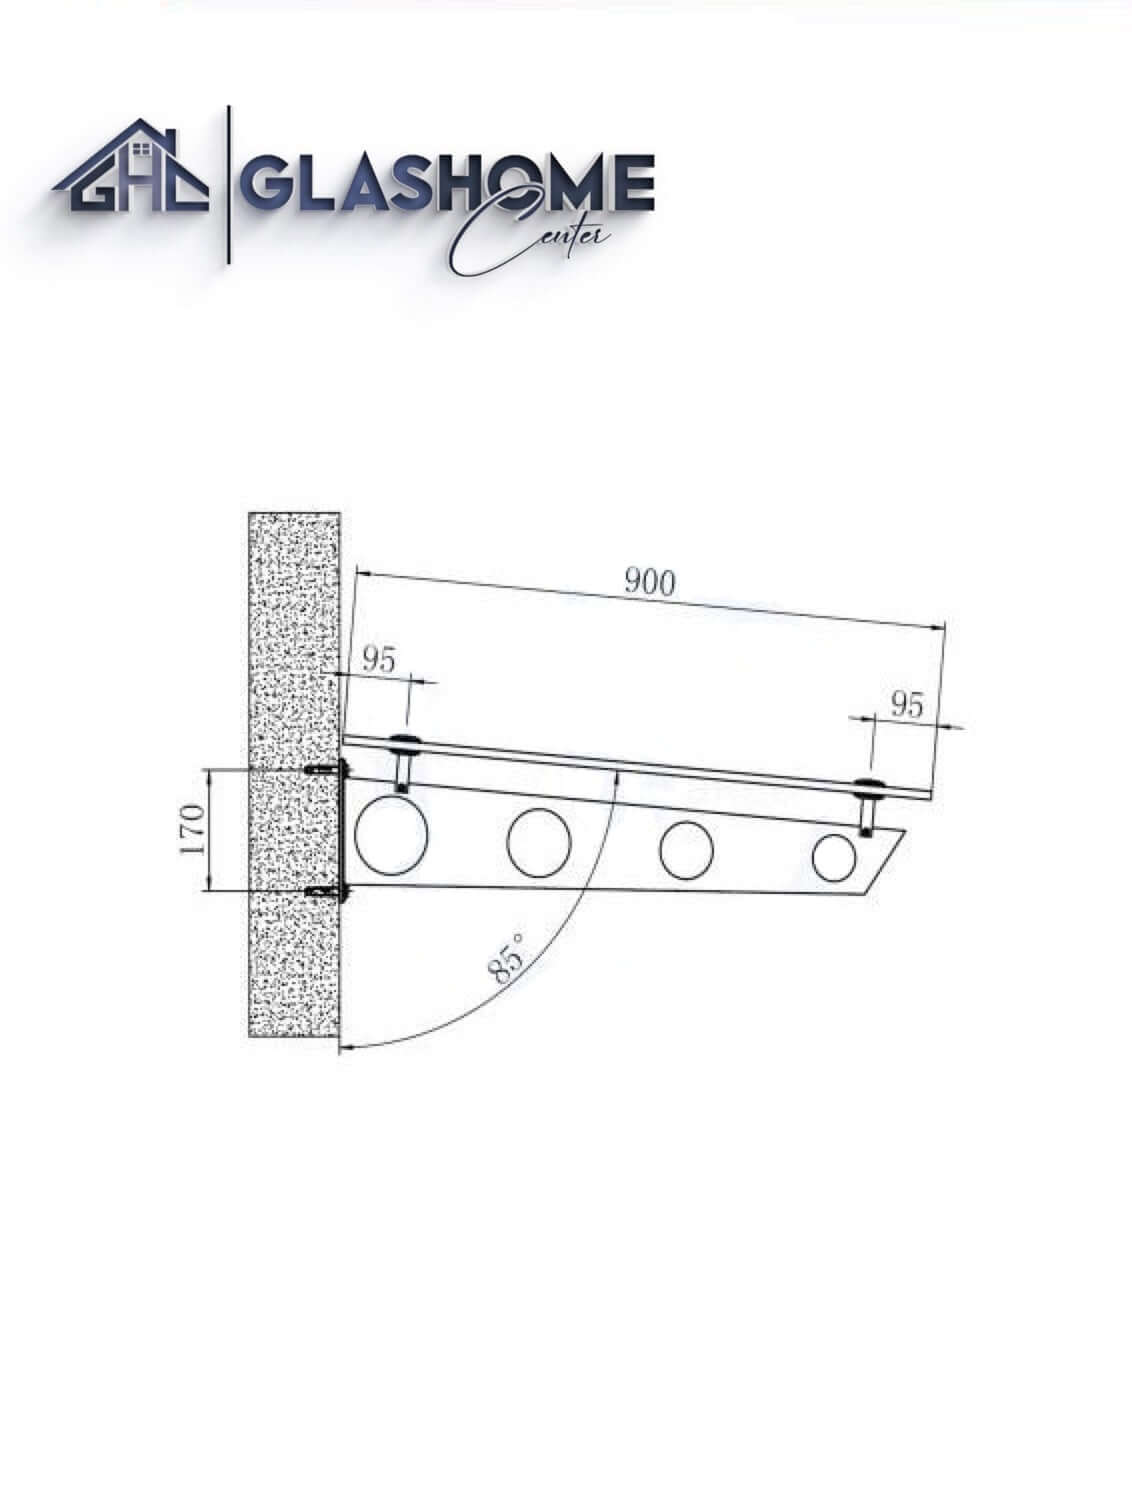 GlasHomeCenter - Glasvordach - Grauglas - 120x90cm - 13.1mm VSG - inkl. 2 Edelstahlhalterungen Variante "Stockholm"